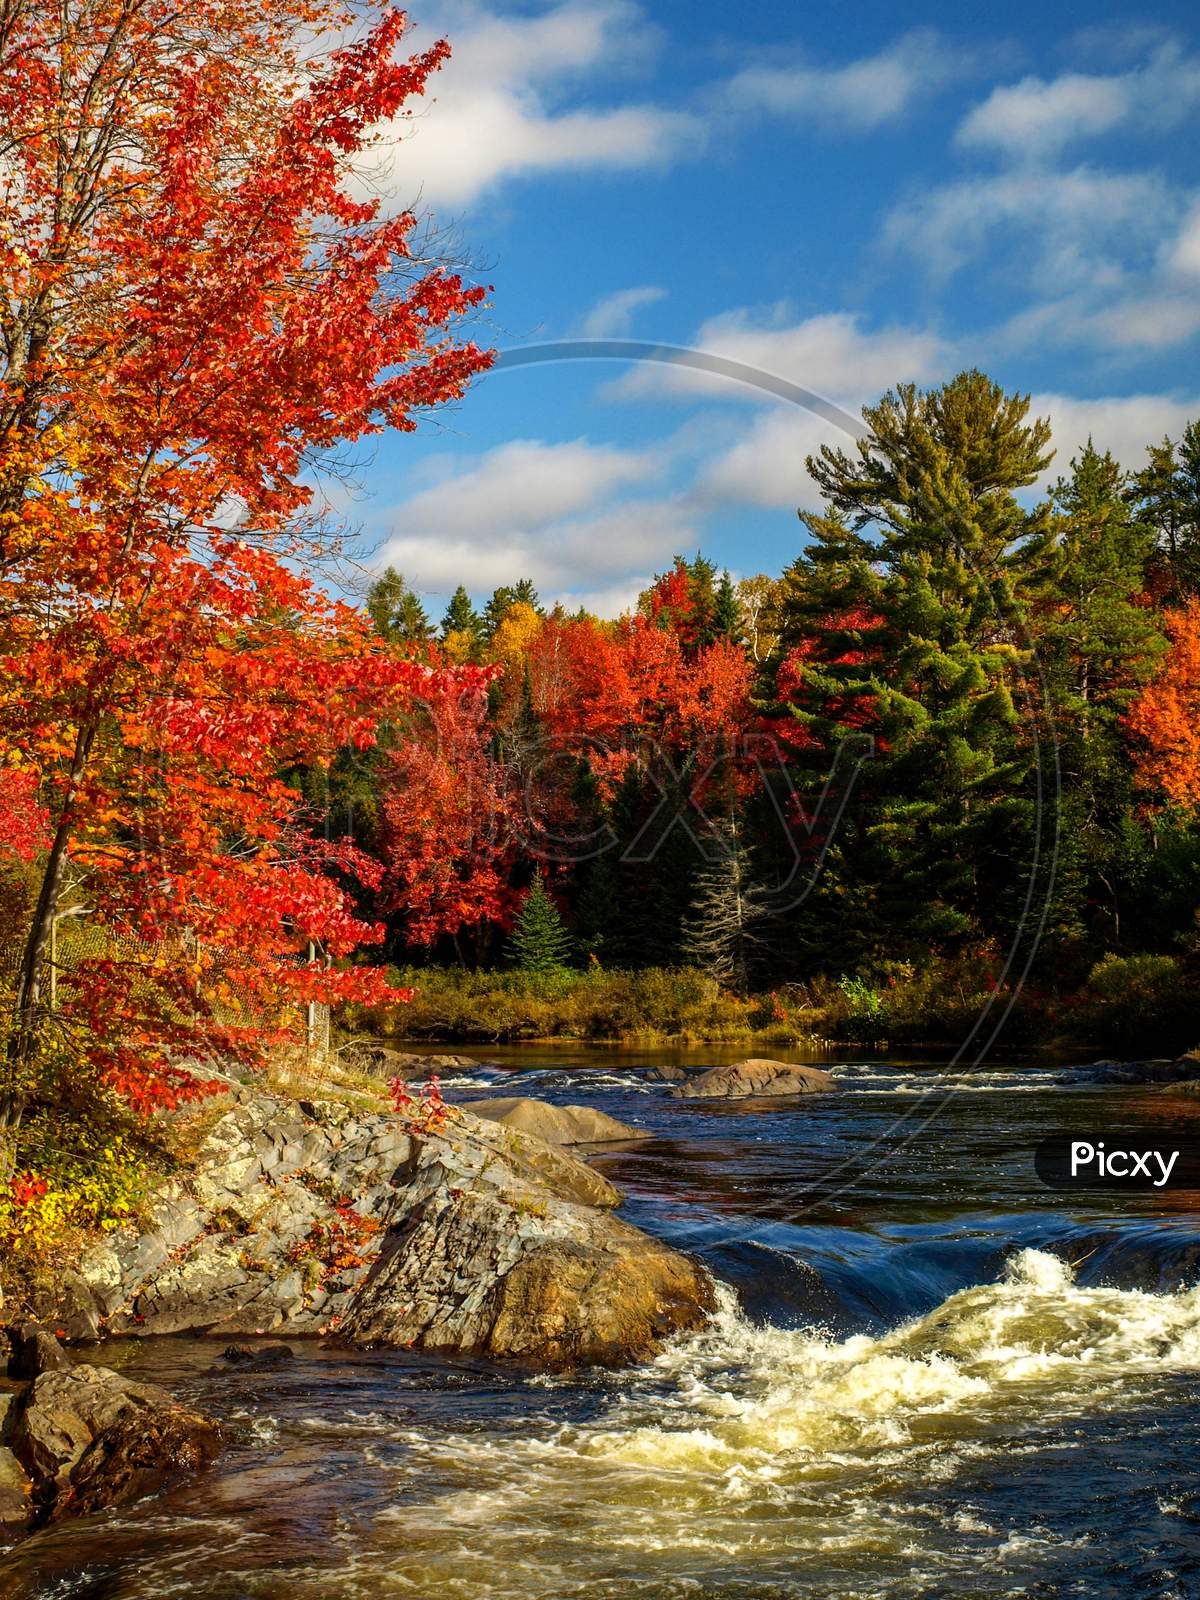 Beautiful Fall colors of Canada - Chutes Provincial Park, Massey, ON, Canada